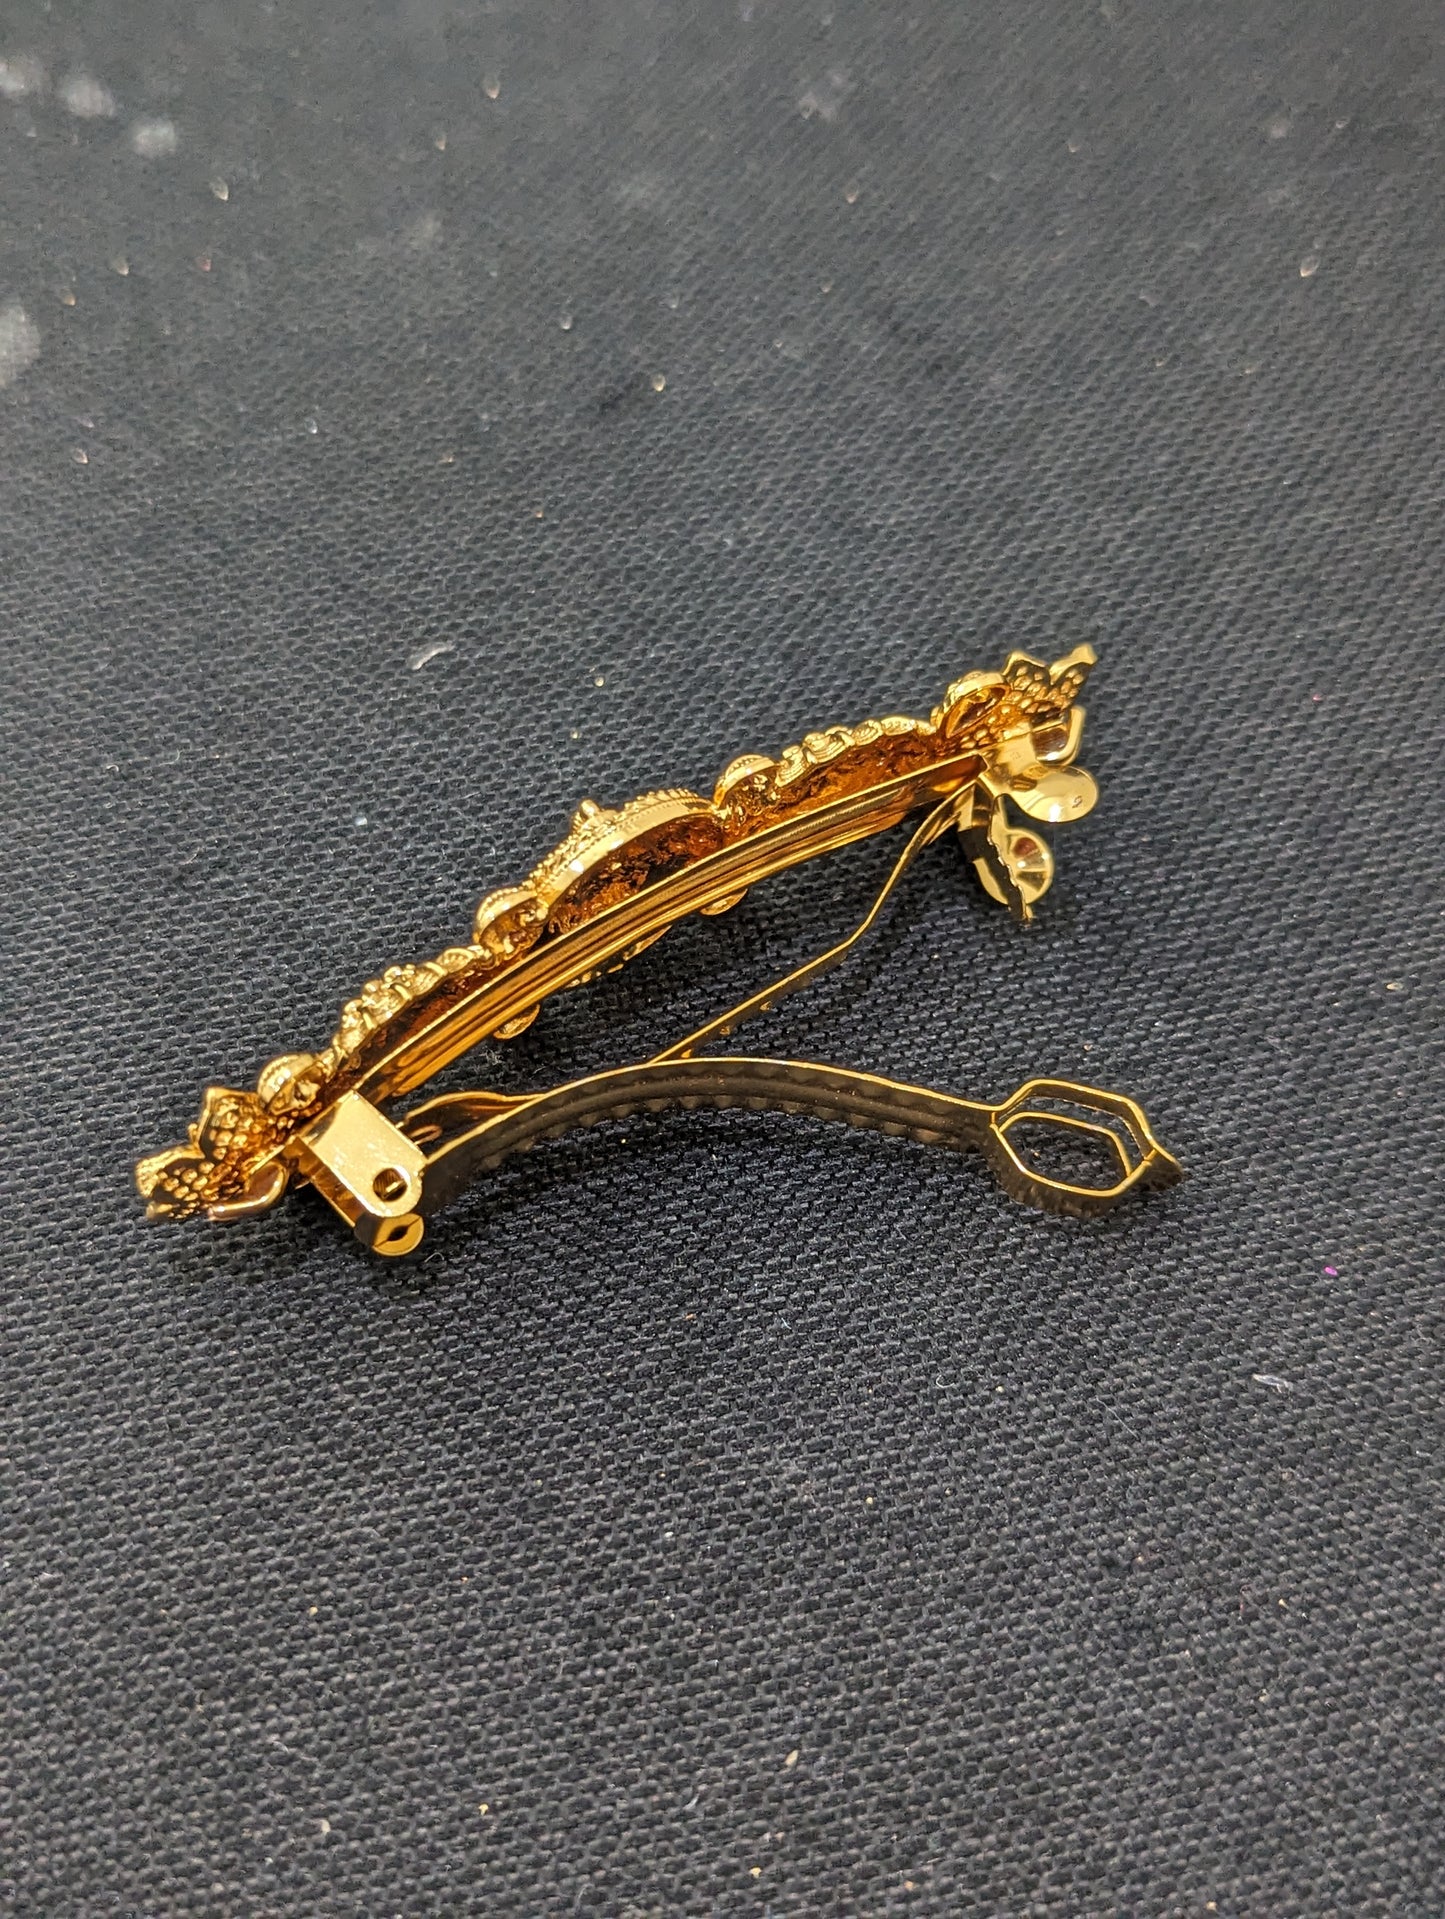 Goddess Lakshmi design gold plated small hair clip